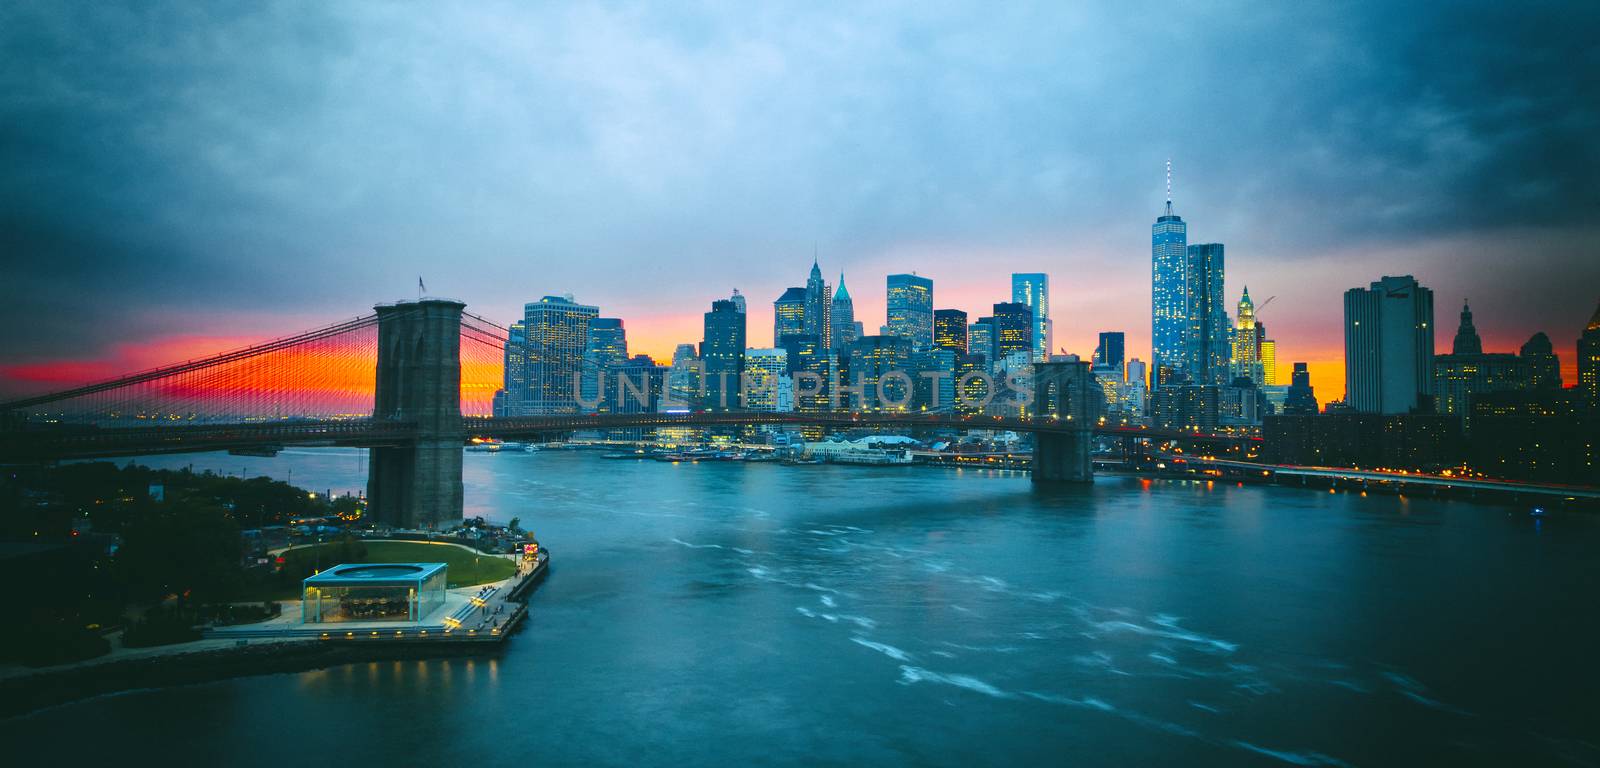 New York Brooklyn Bridge and Downtown by hanusst